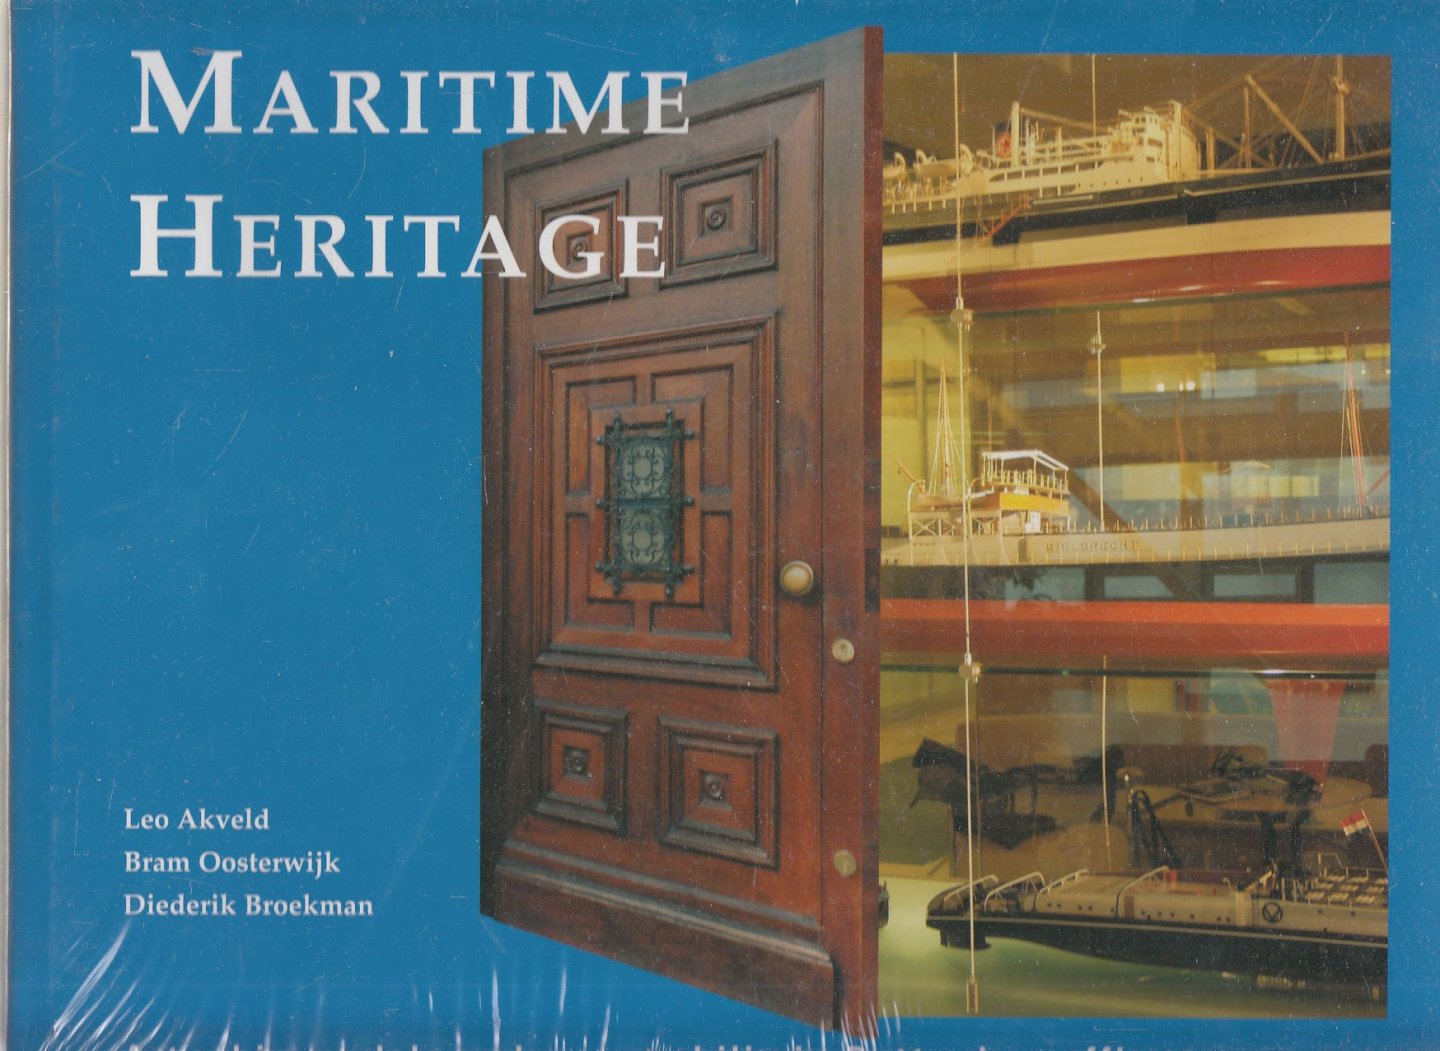 Akveld, Leo; Oosterwijk, Bram; photogr. Diederik Broekman - Maritime heritage : art, ship models and memorabilia in Rotterdam offices